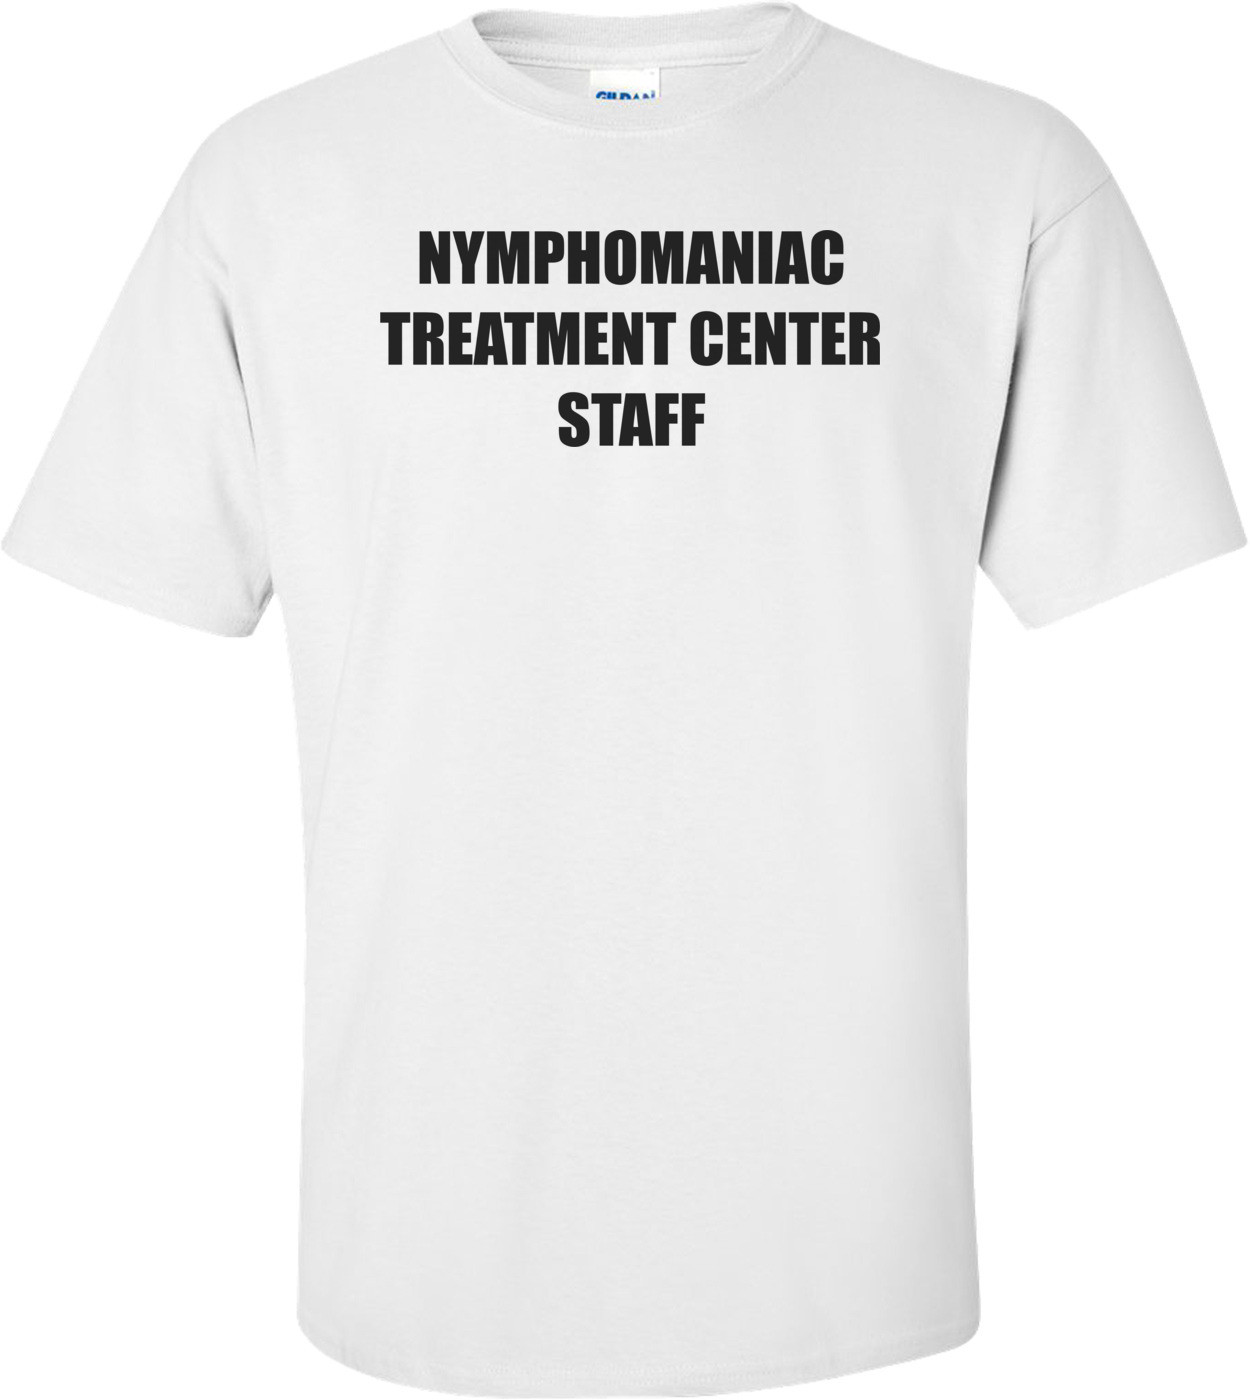 NYMPHOMANIAC TREATMENT CENTER STAFF Shirt